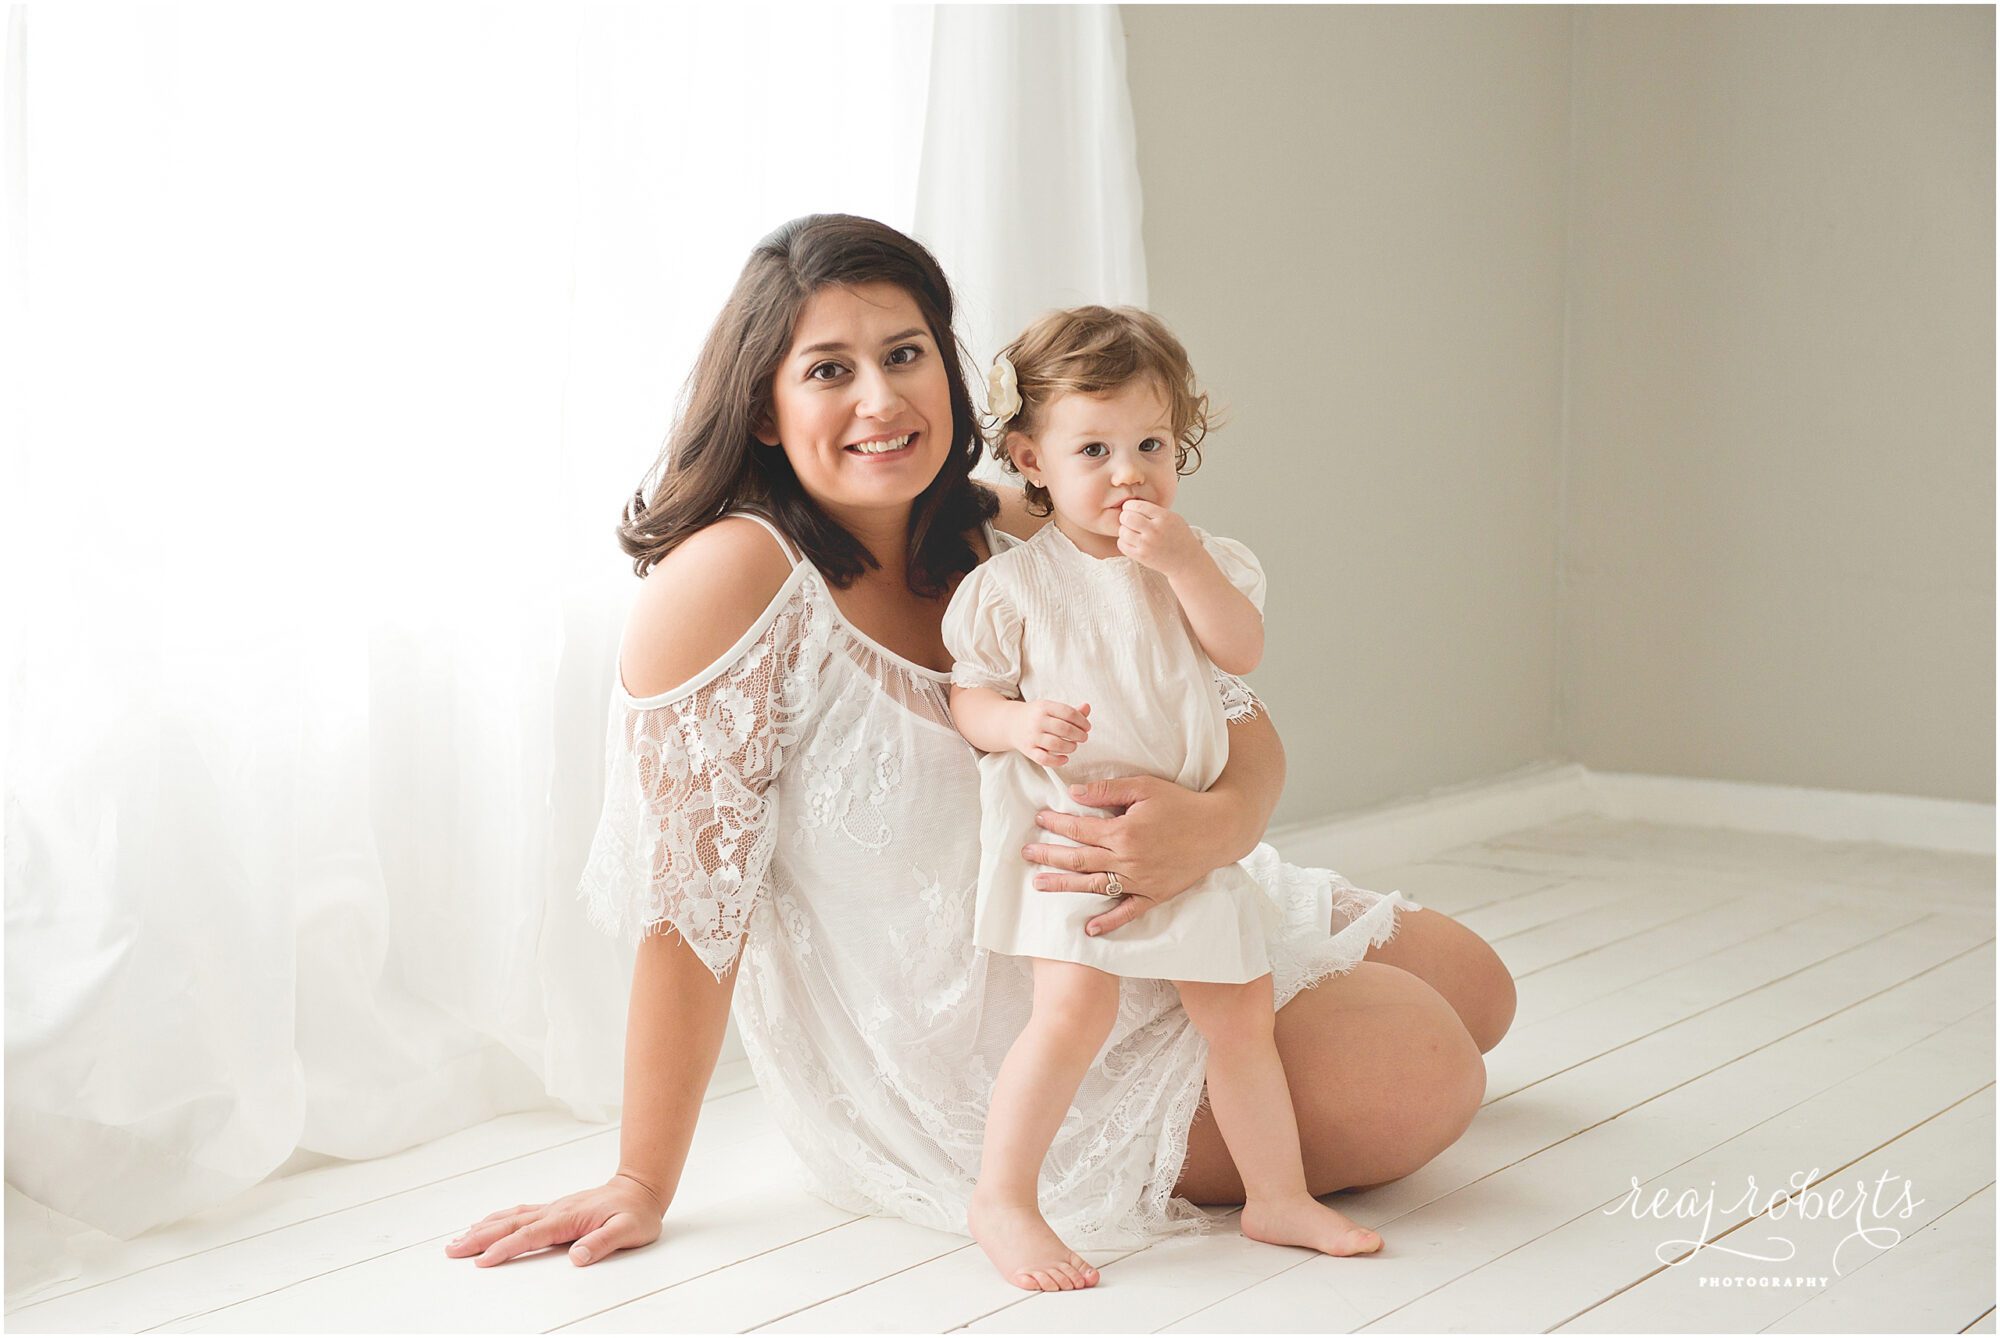 Maternity Photos with Siblings | Chandler, AZ | Reaj Roberts Photography